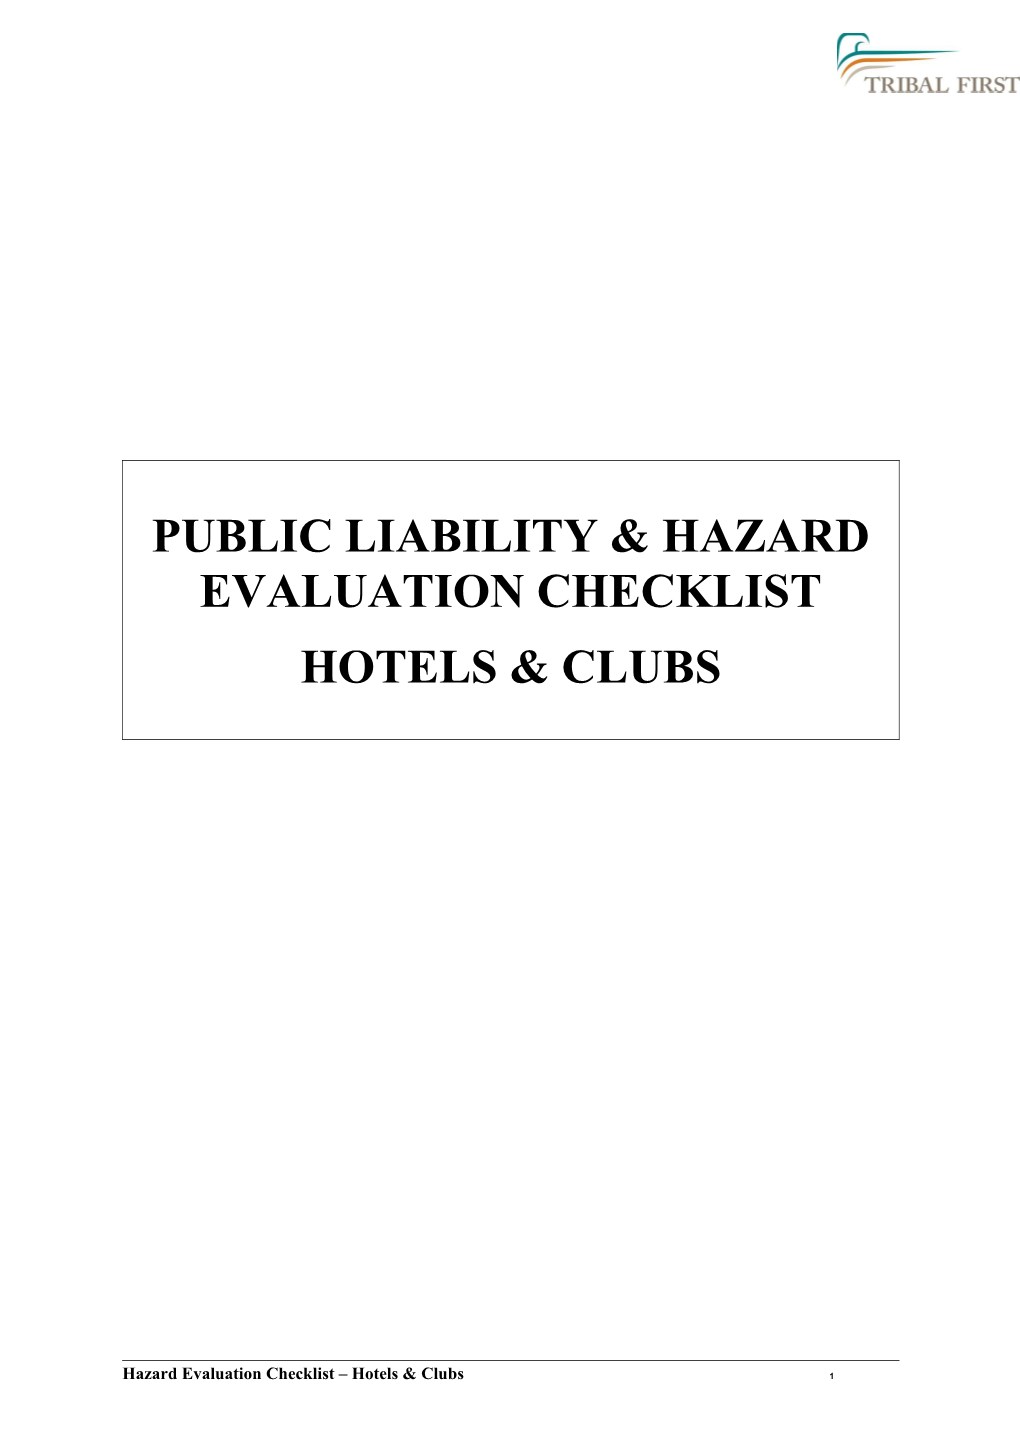 Public Liability & Hazard Evaluation Checklist